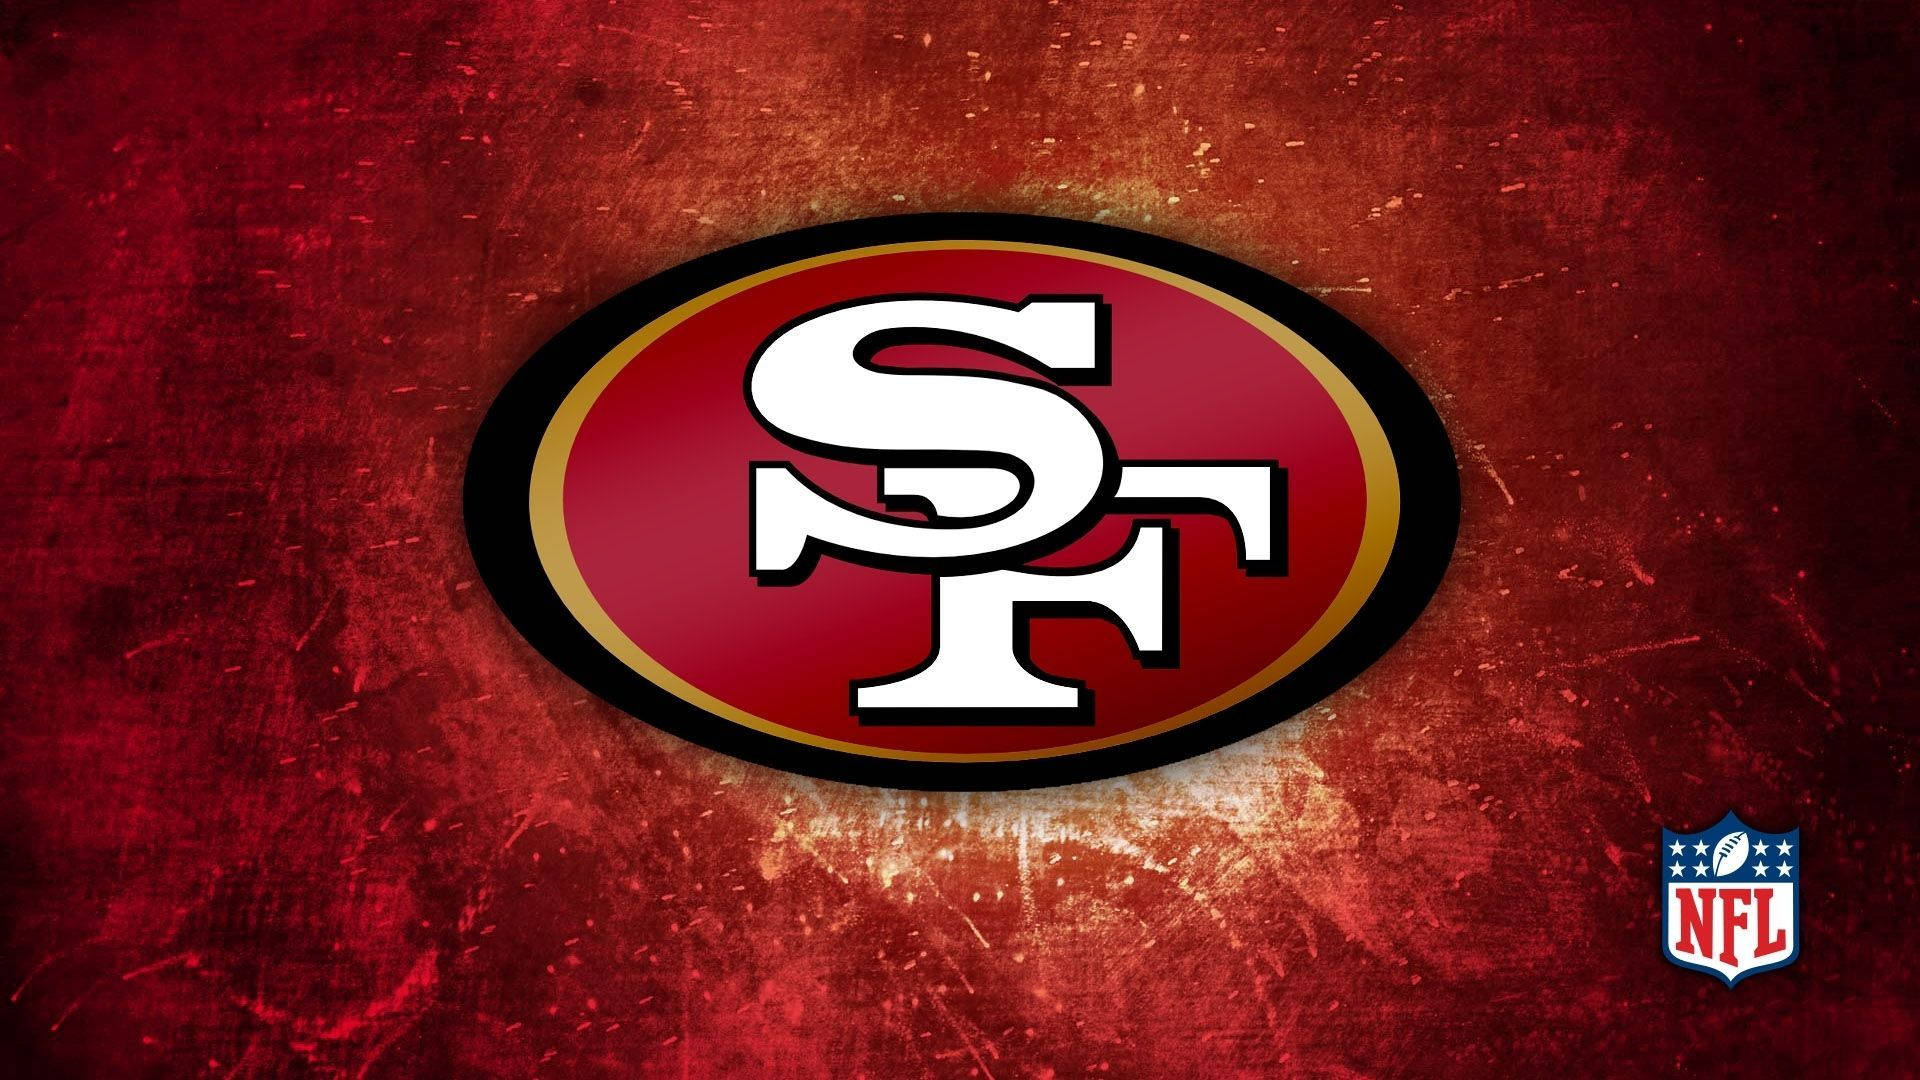 Red Grunge 49ers Sf Logo Background